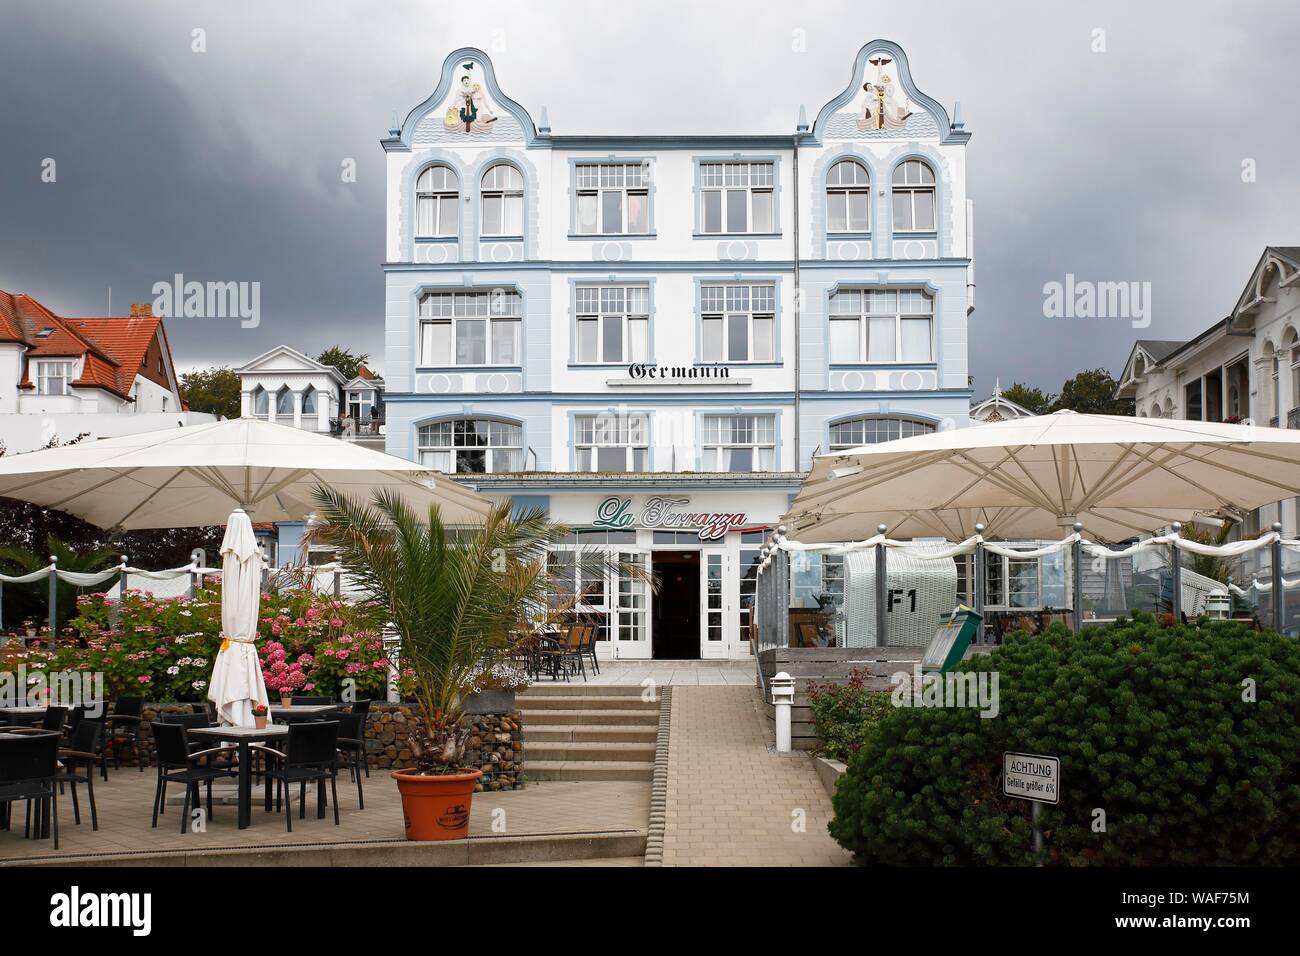 Historical Hotel Germania, spa architecture, imperial baths, Bansin, Usedom Island, Mecklenburg-Western Pomerania, Germany Stock Photo